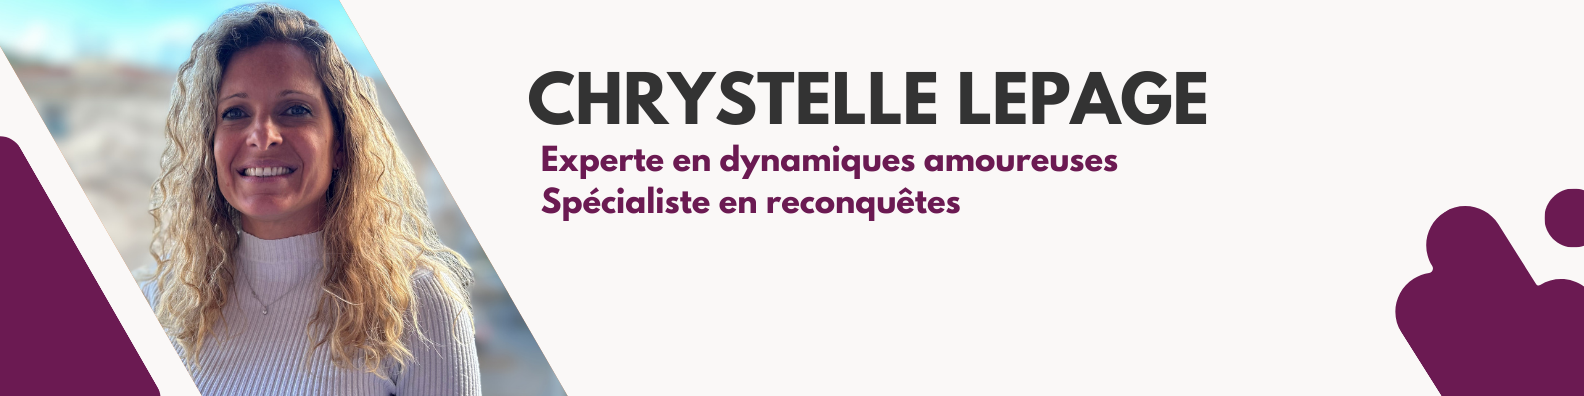 Chrystelle Lepage